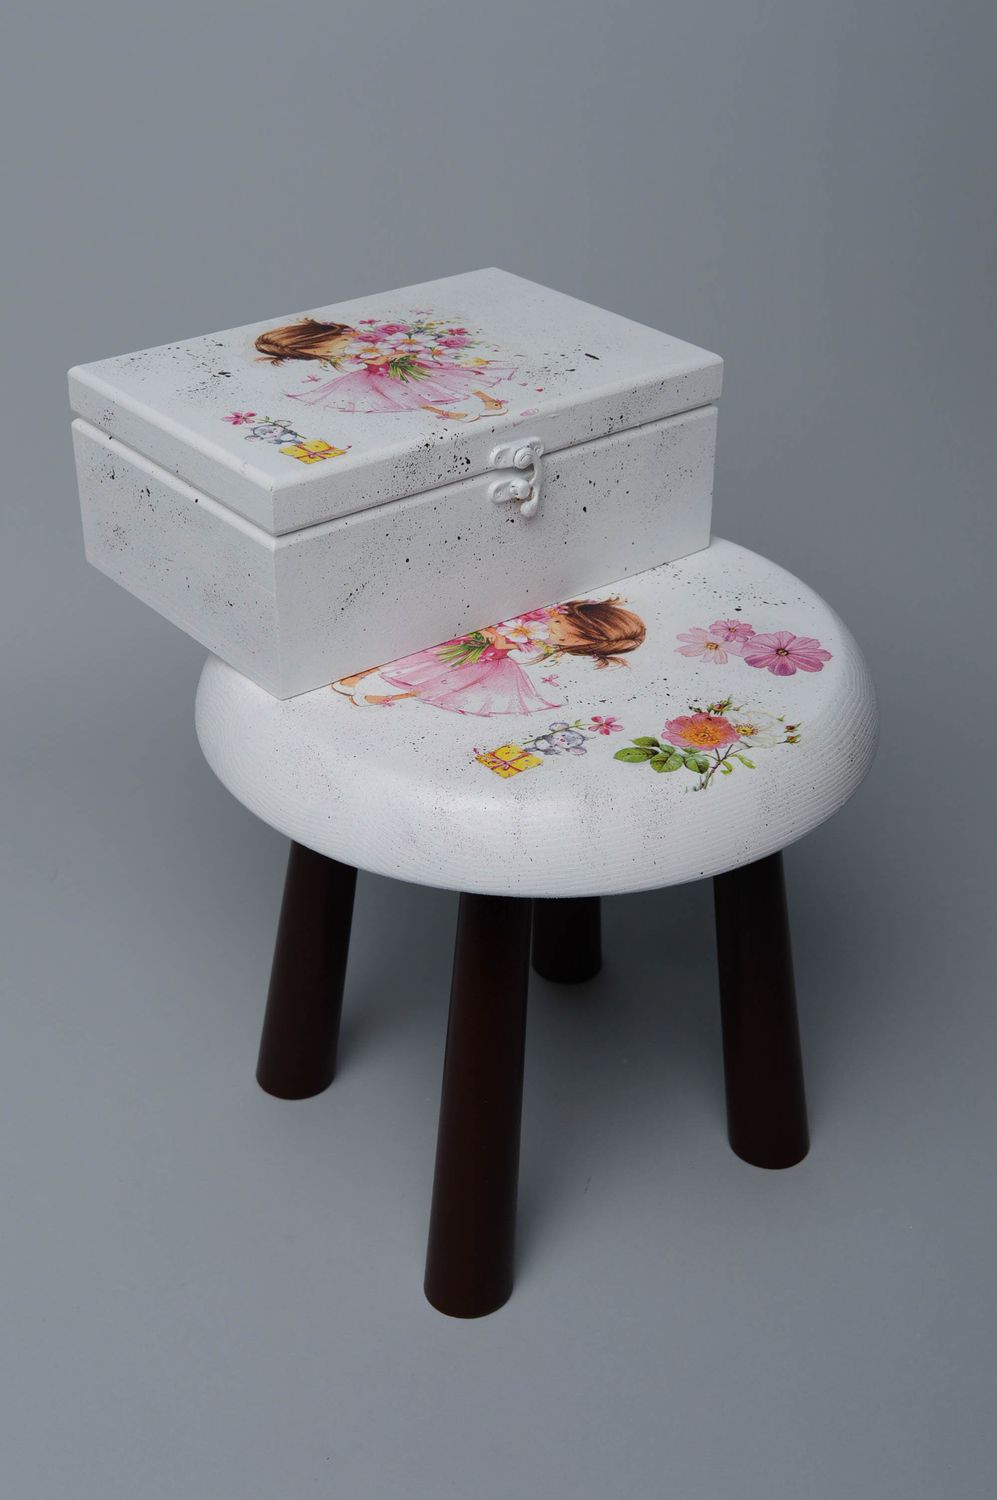 Decoupage wooden stool and jewelry box photo 5